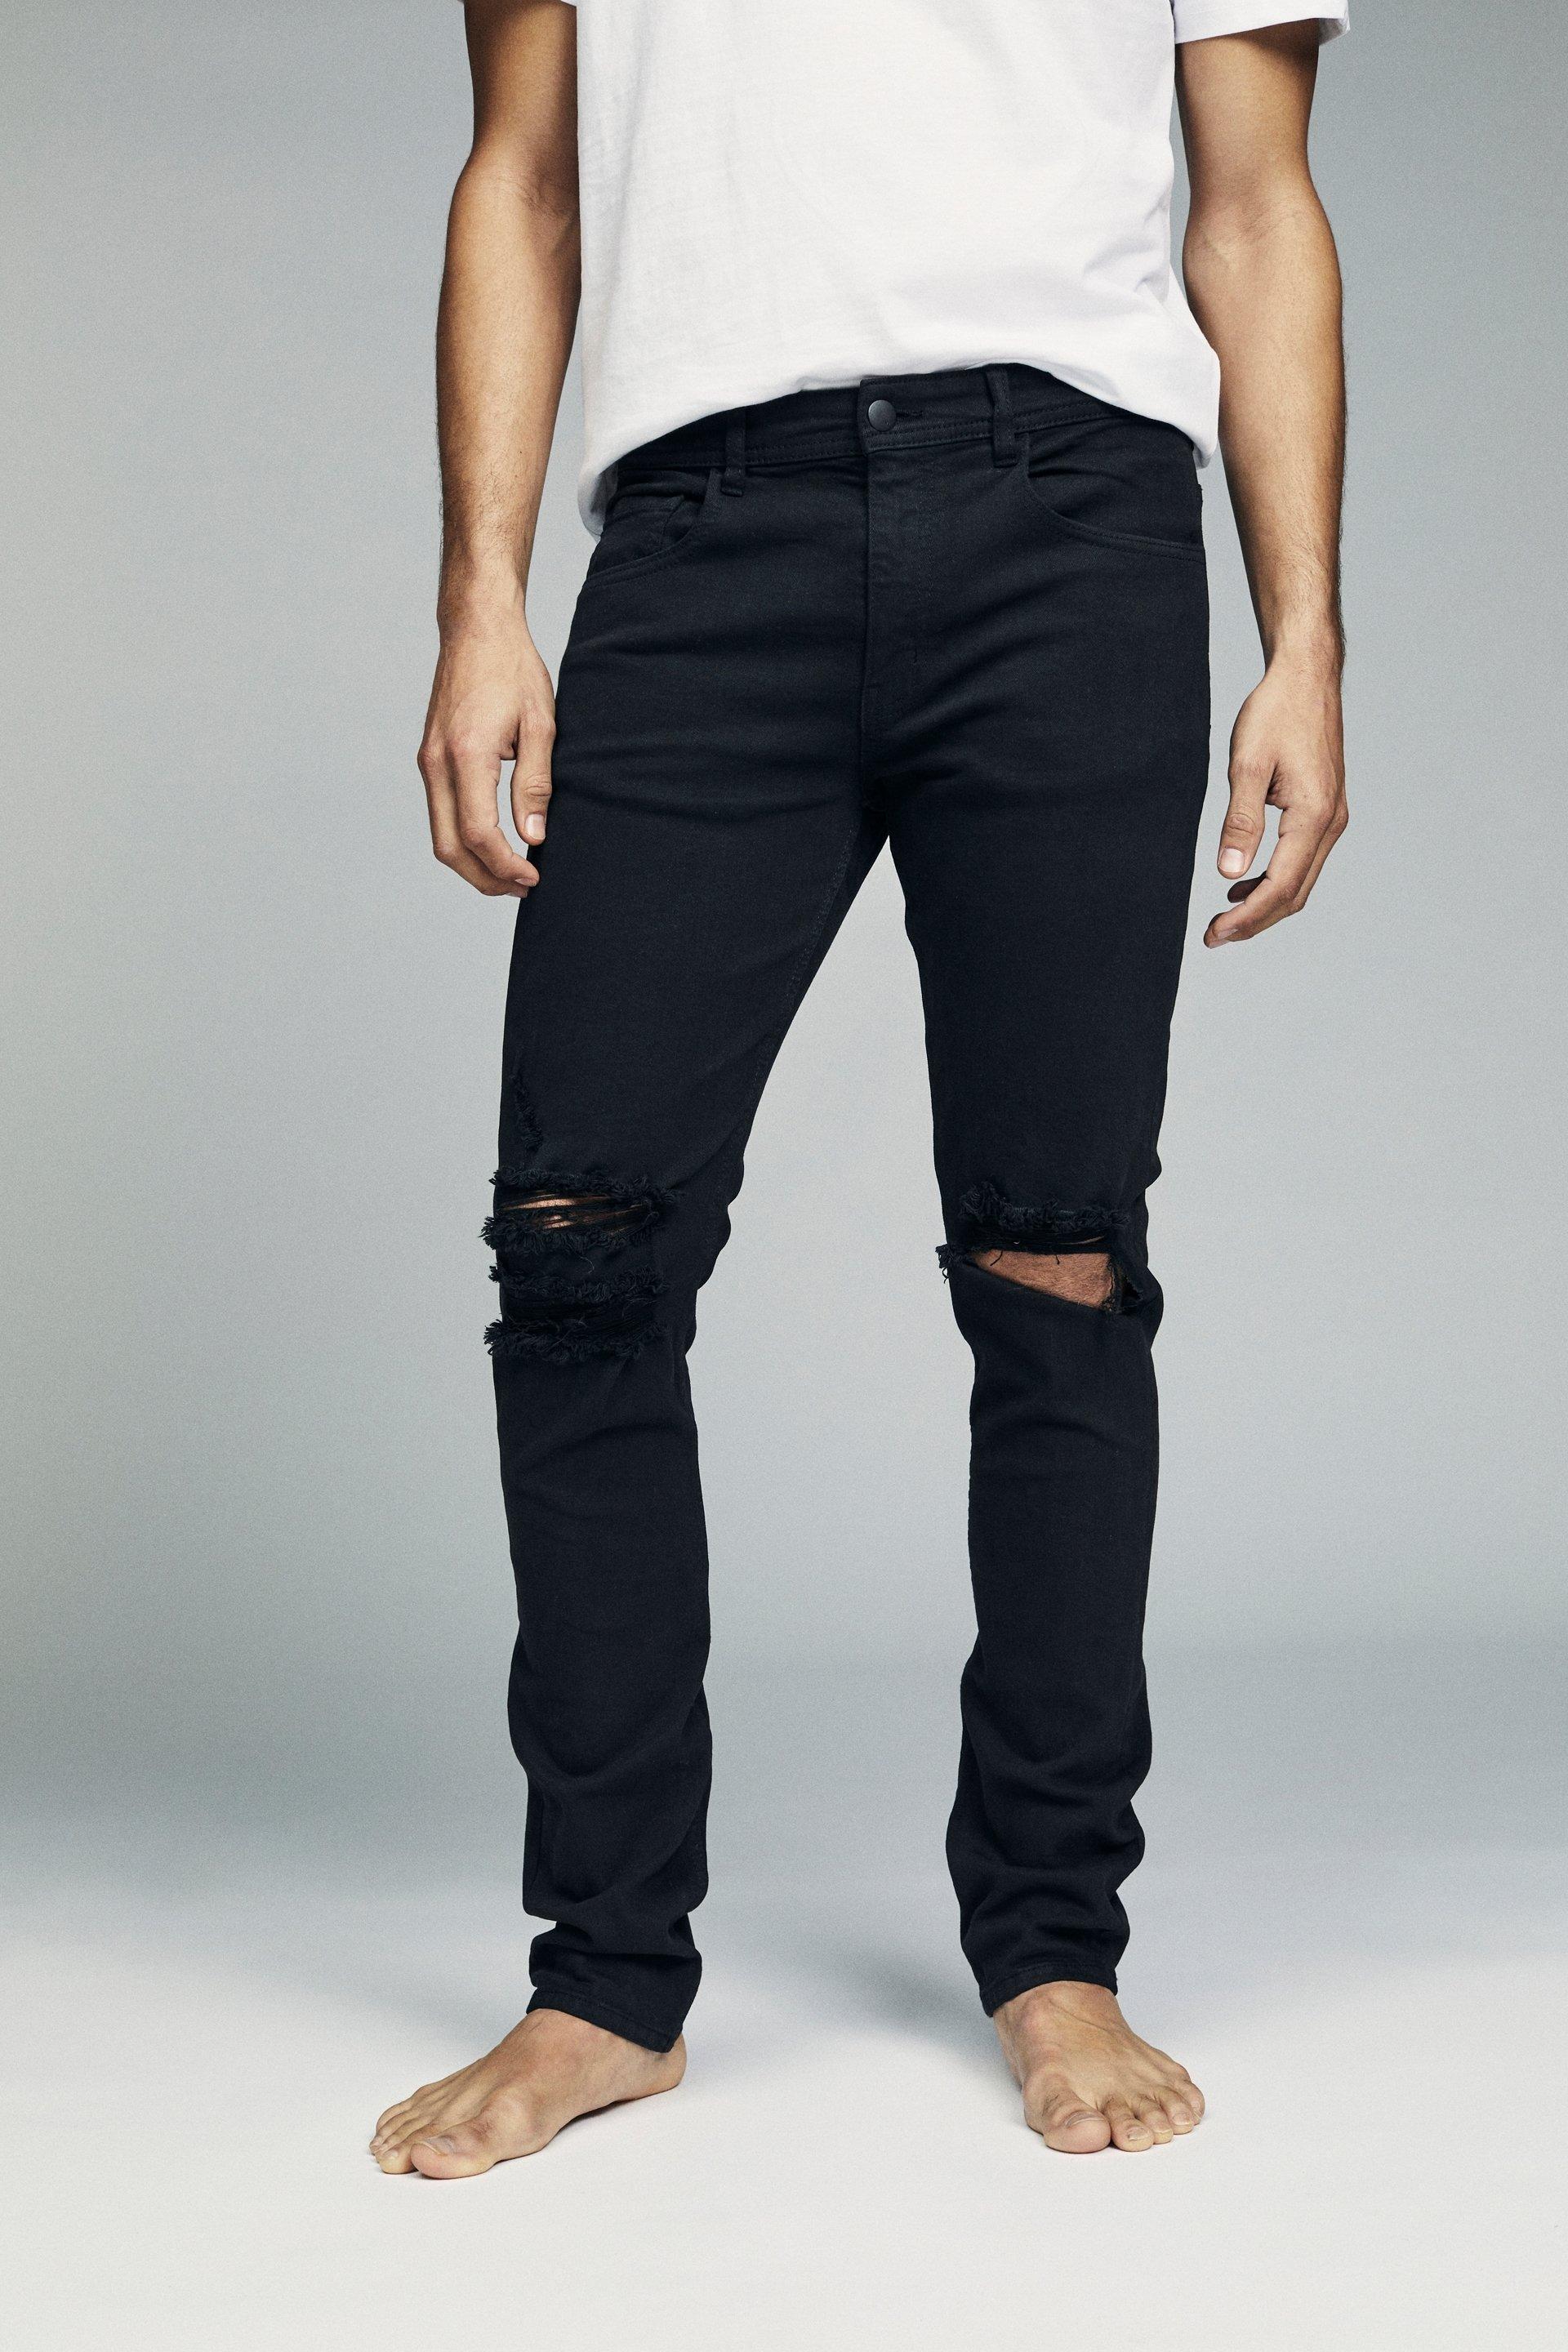 Super skinny jean - jet black + blow out Cotton On Jeans | Superbalist.com